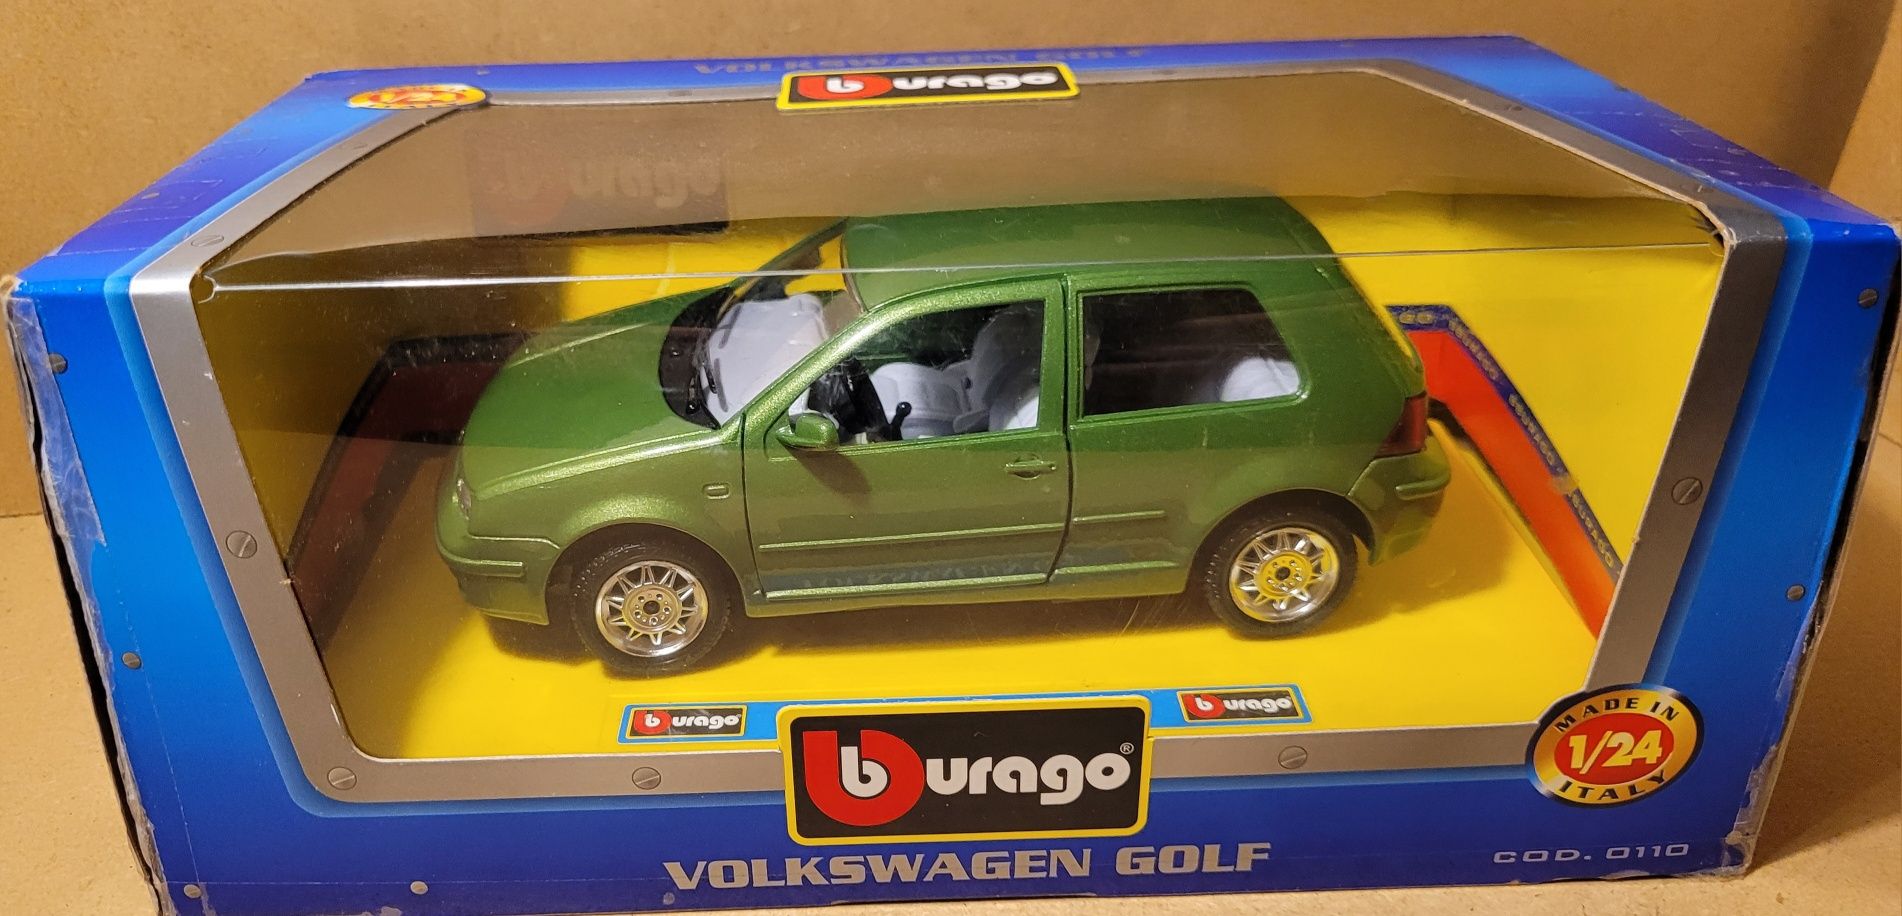 Model vw golf 4 burago skaka 1/24 cod 0110